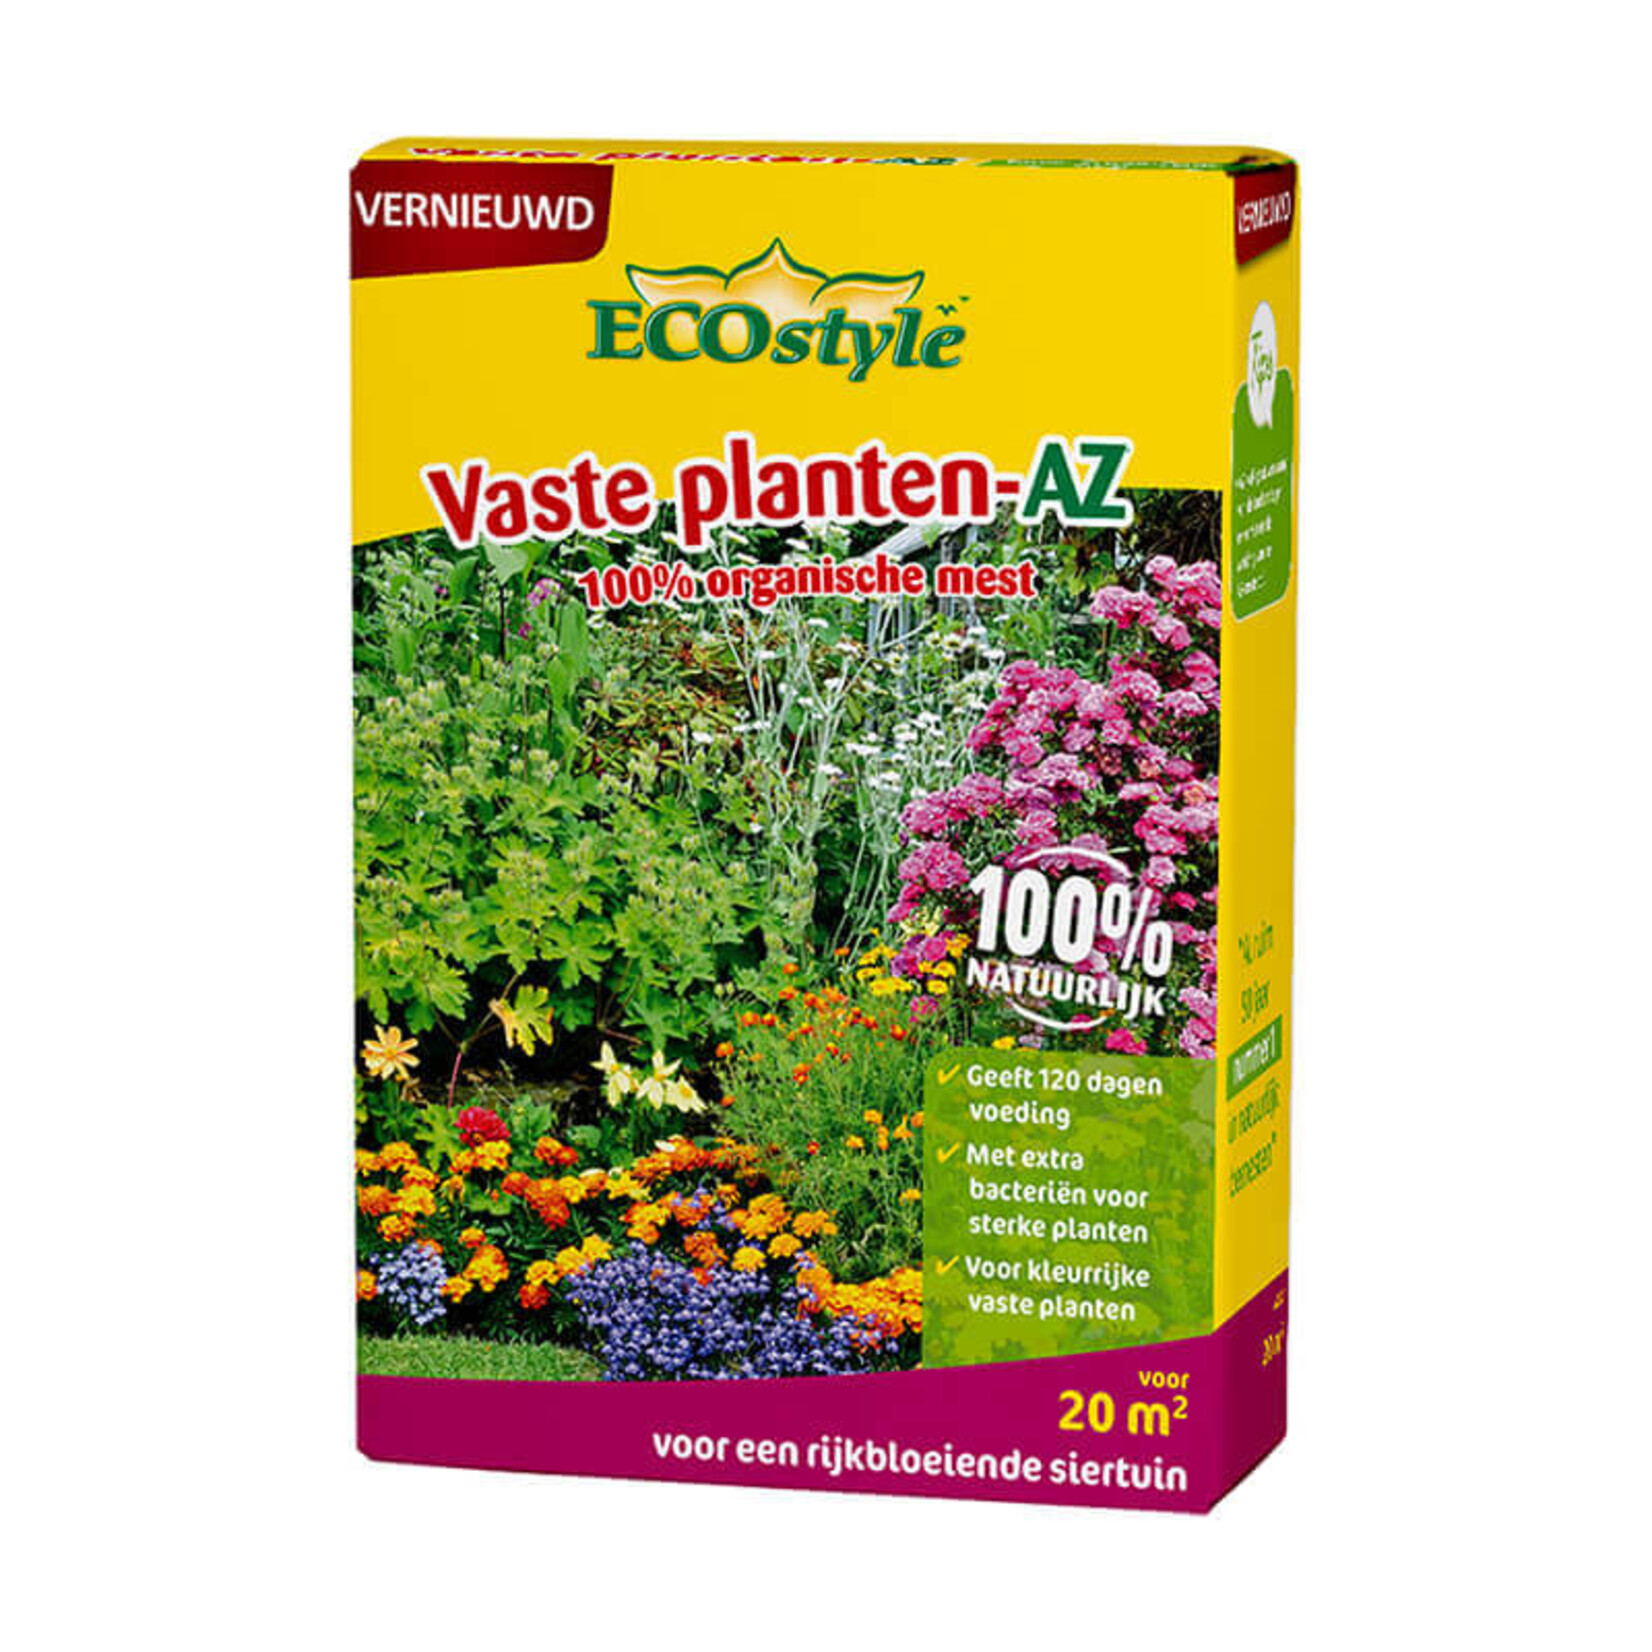 ECOstyle Vaste planten-AZ 1,6 kg meststof (20 m²)